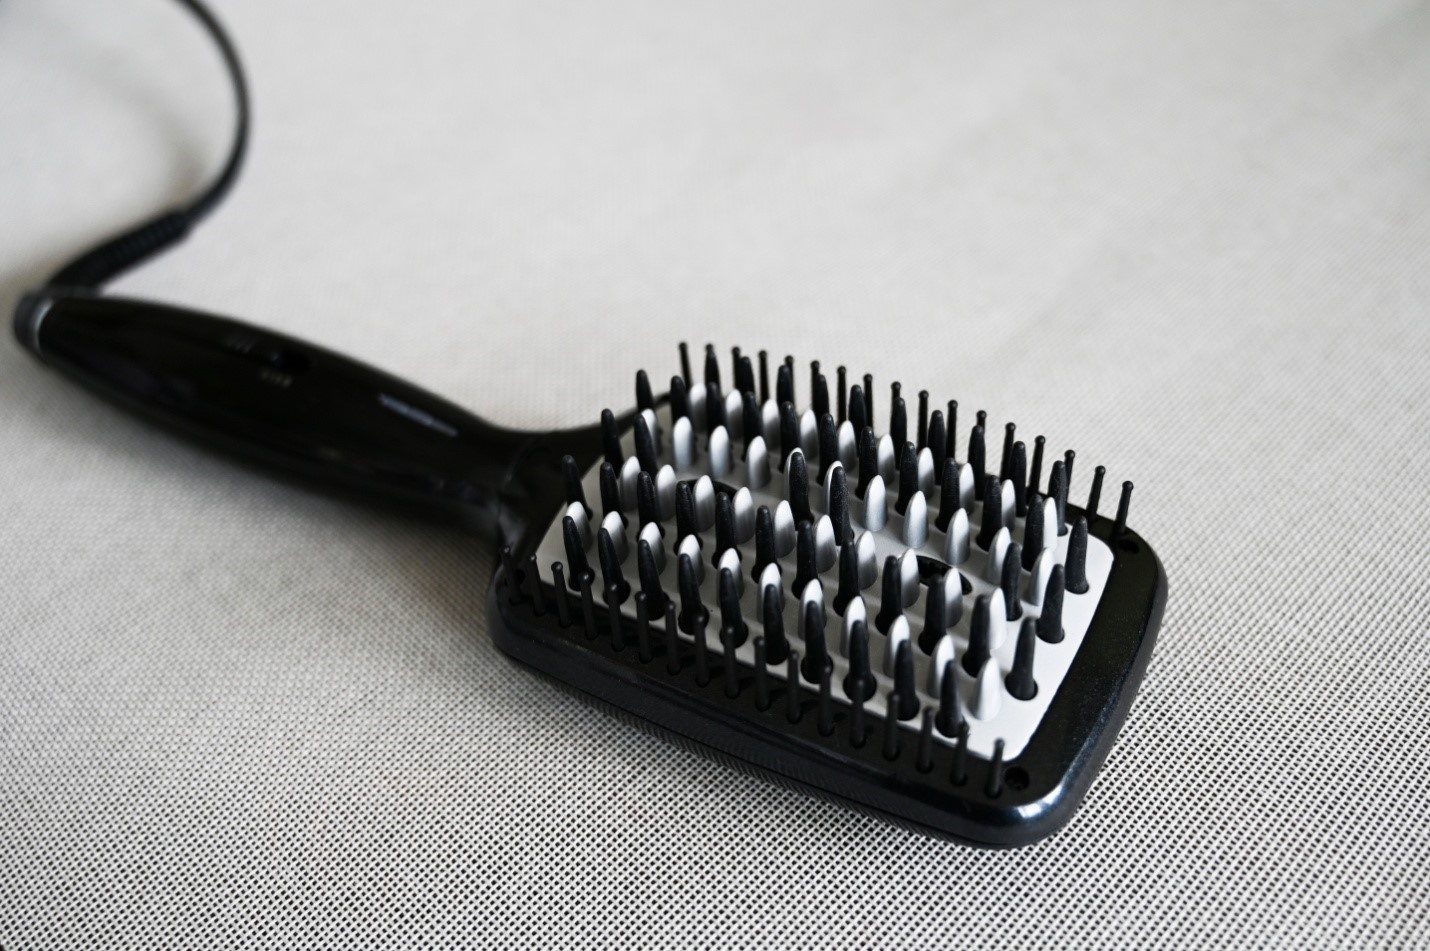 Hair Straightening Brush for Busy-Girls-On-the-Go 1